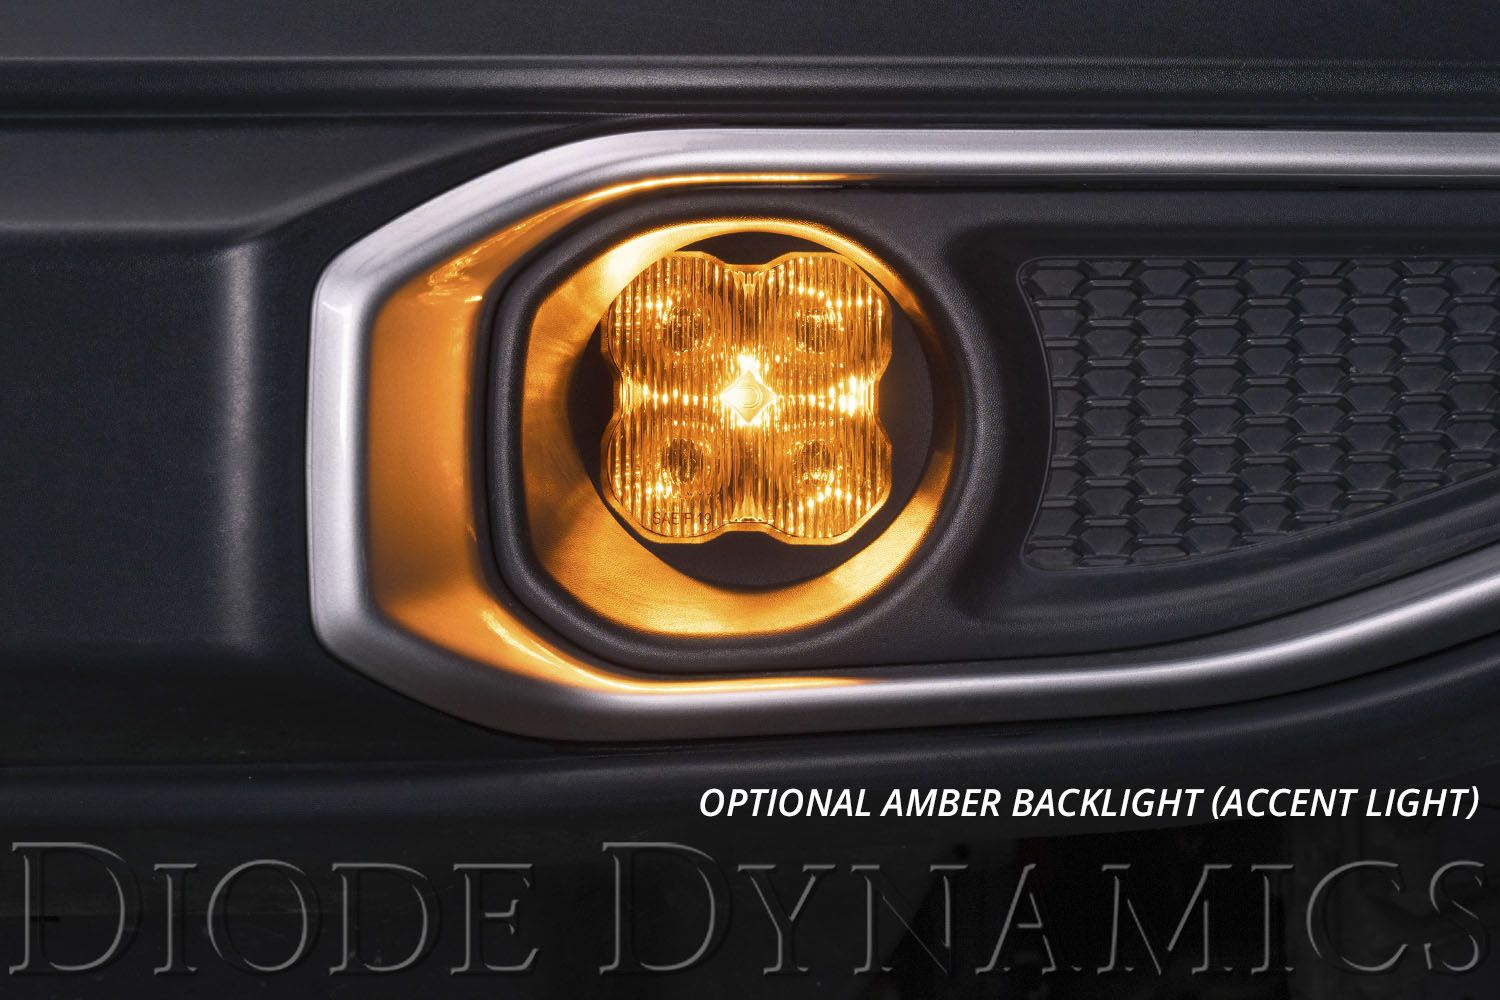 SS3 LED Fog Light Kit for 2013-2016 Ford Fusion Diode Dynamics-